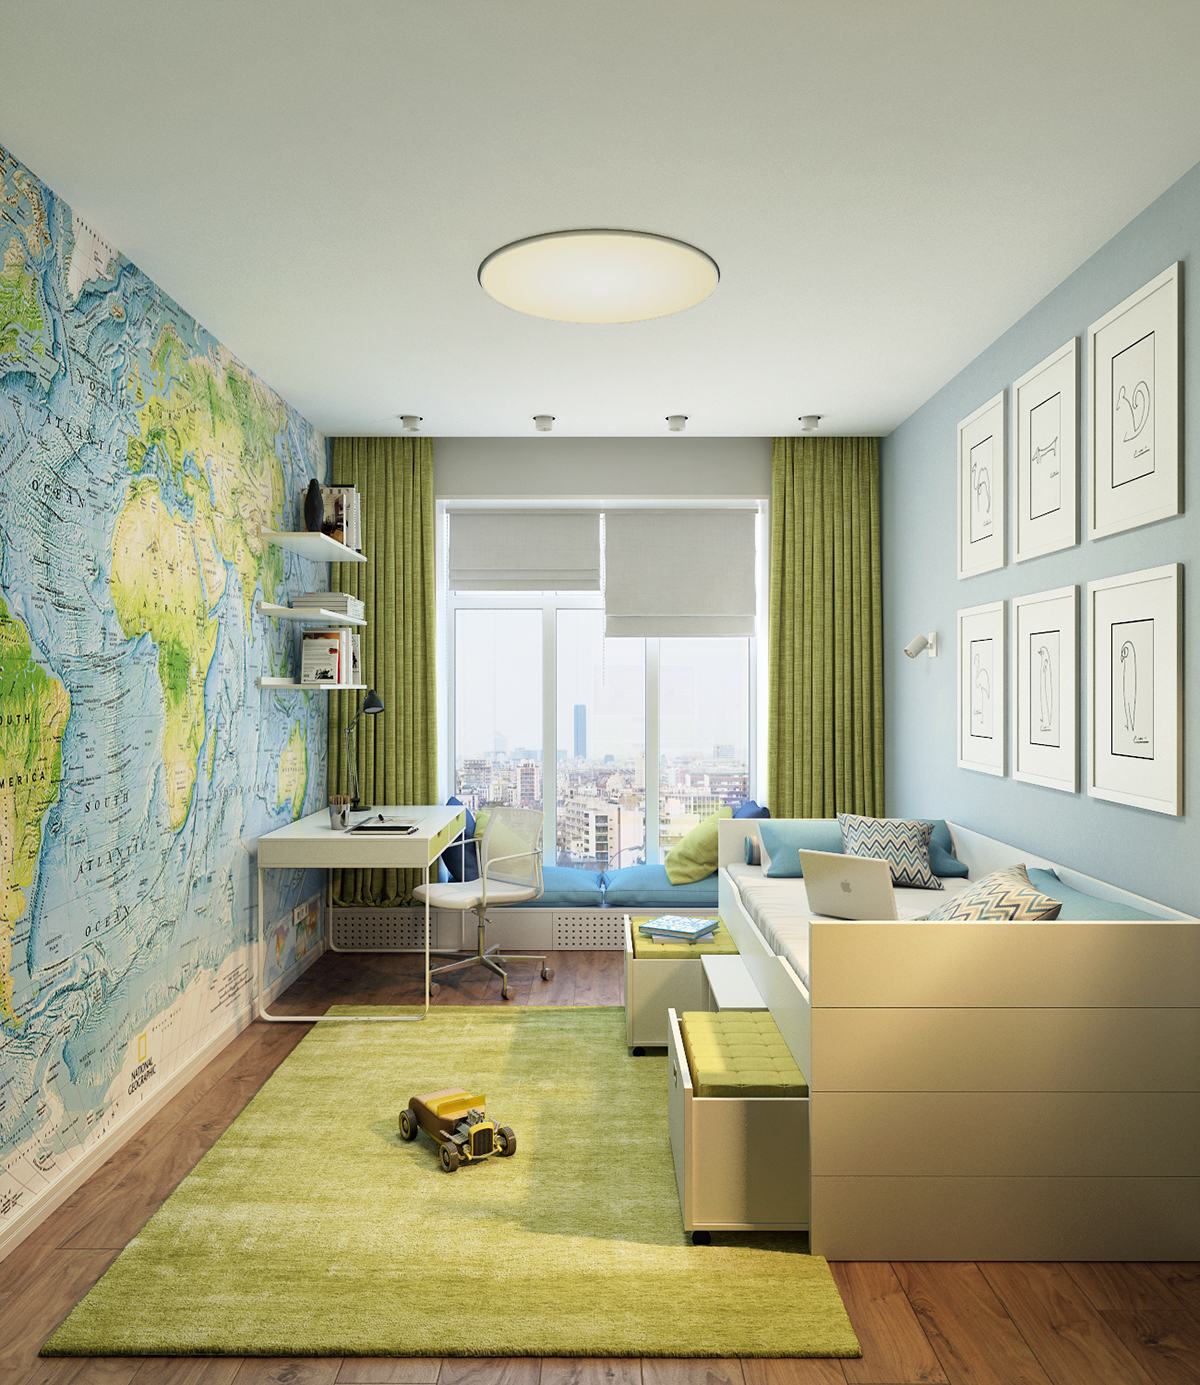 Room decor ideas "width =" 1200 "height =" 1385 "srcset =" https://mileray.com/wp-content/uploads/2020/05/1588511530_76_25-Bedroom-Paint-Ideas-For-Teenage-Girl.jpg 1200w, https: / /mileray.com/wp-content/uploads/2016/04/stylish-map-kids-bedroom-decor-260x300.jpg 260w, https://mileray.com/wp-content/uploads/2016/04/stylish - map-kids-bedroom-decor-768x886.jpg 768w, https://mileray.com/wp-content/uploads/2016/04/stylish-map-kids-bedroom-decor-887x1024.jpg 887w, https: / / mileray.com/wp-content/uploads/2016/04/stylish-map-kids-bedroom-decor-696x803.jpg 696w, https://mileray.com/wp-content/uploads/2016/04/stylish- map -kids-bedroom-decor-1068x1233.jpg 1068w, https://mileray.com/wp-content/uploads/2016/04/stylish-map-kids-bedroom-decor-364x420.jpg 364w "Sizes =" (maximum Width: 1200px) 100vw, 1200px